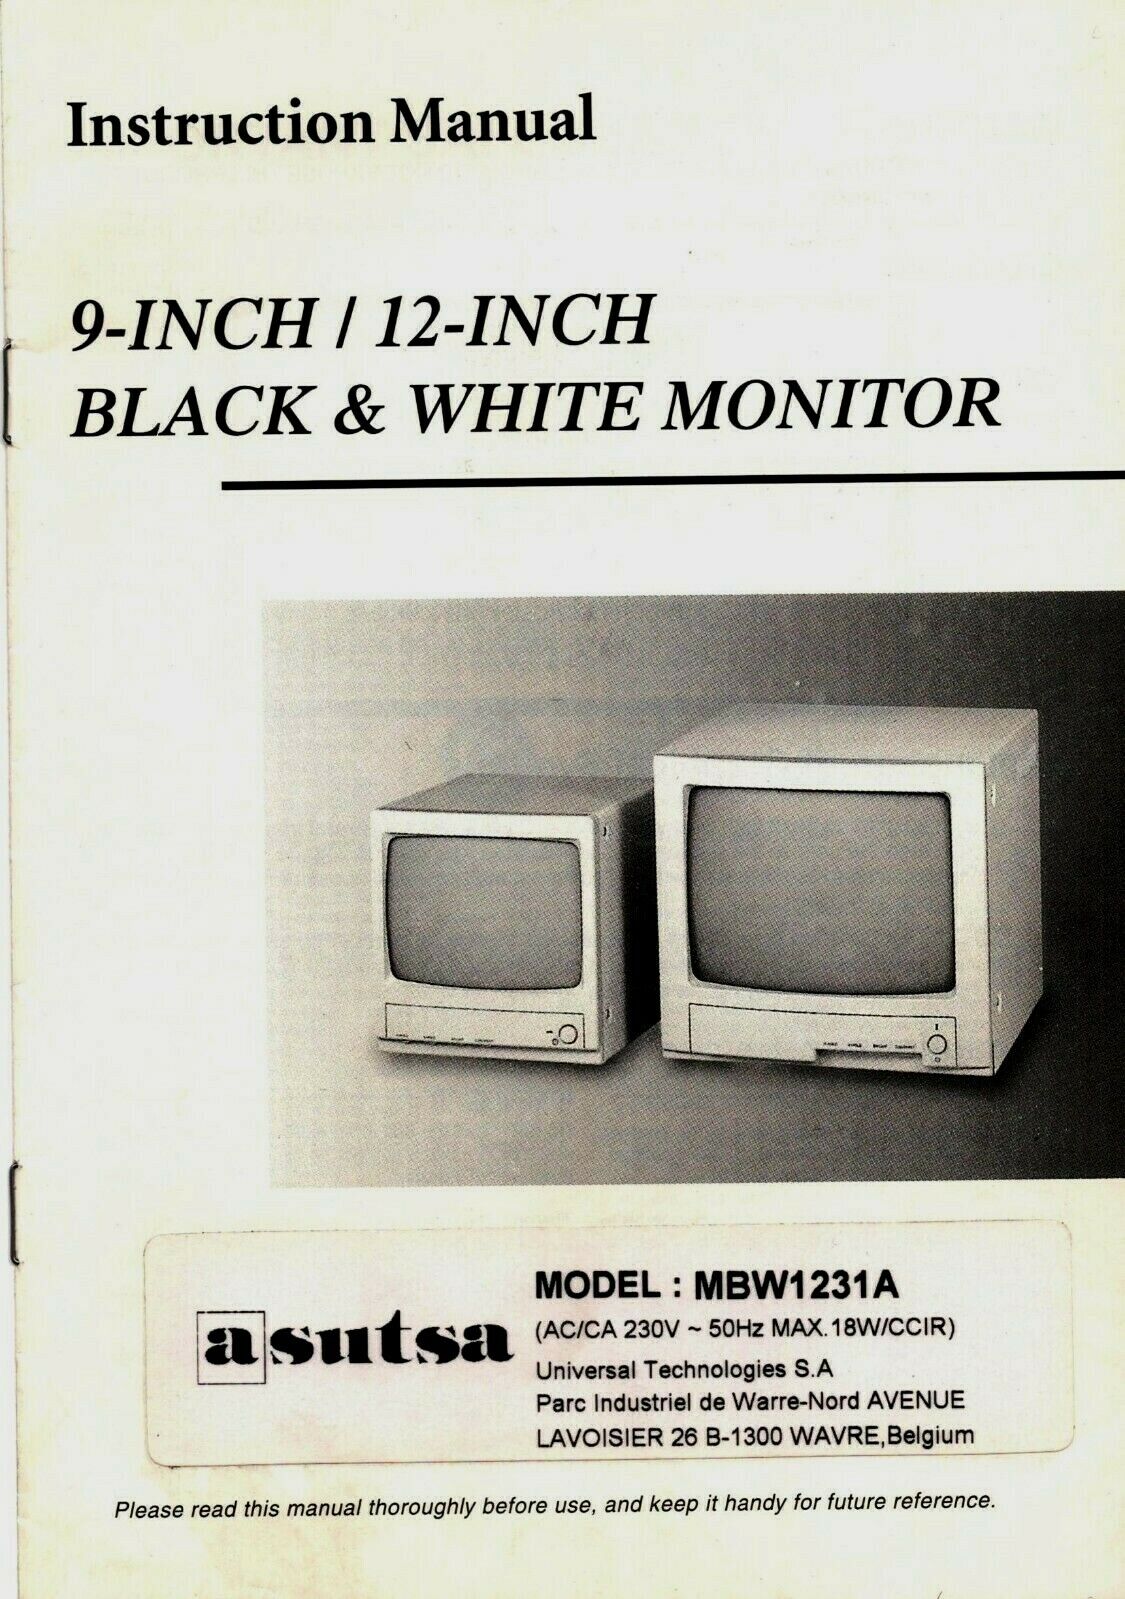 Instrukcja obsługi # Asutsa # Monitor # Model: MBW1231A # angielski # 8 stron